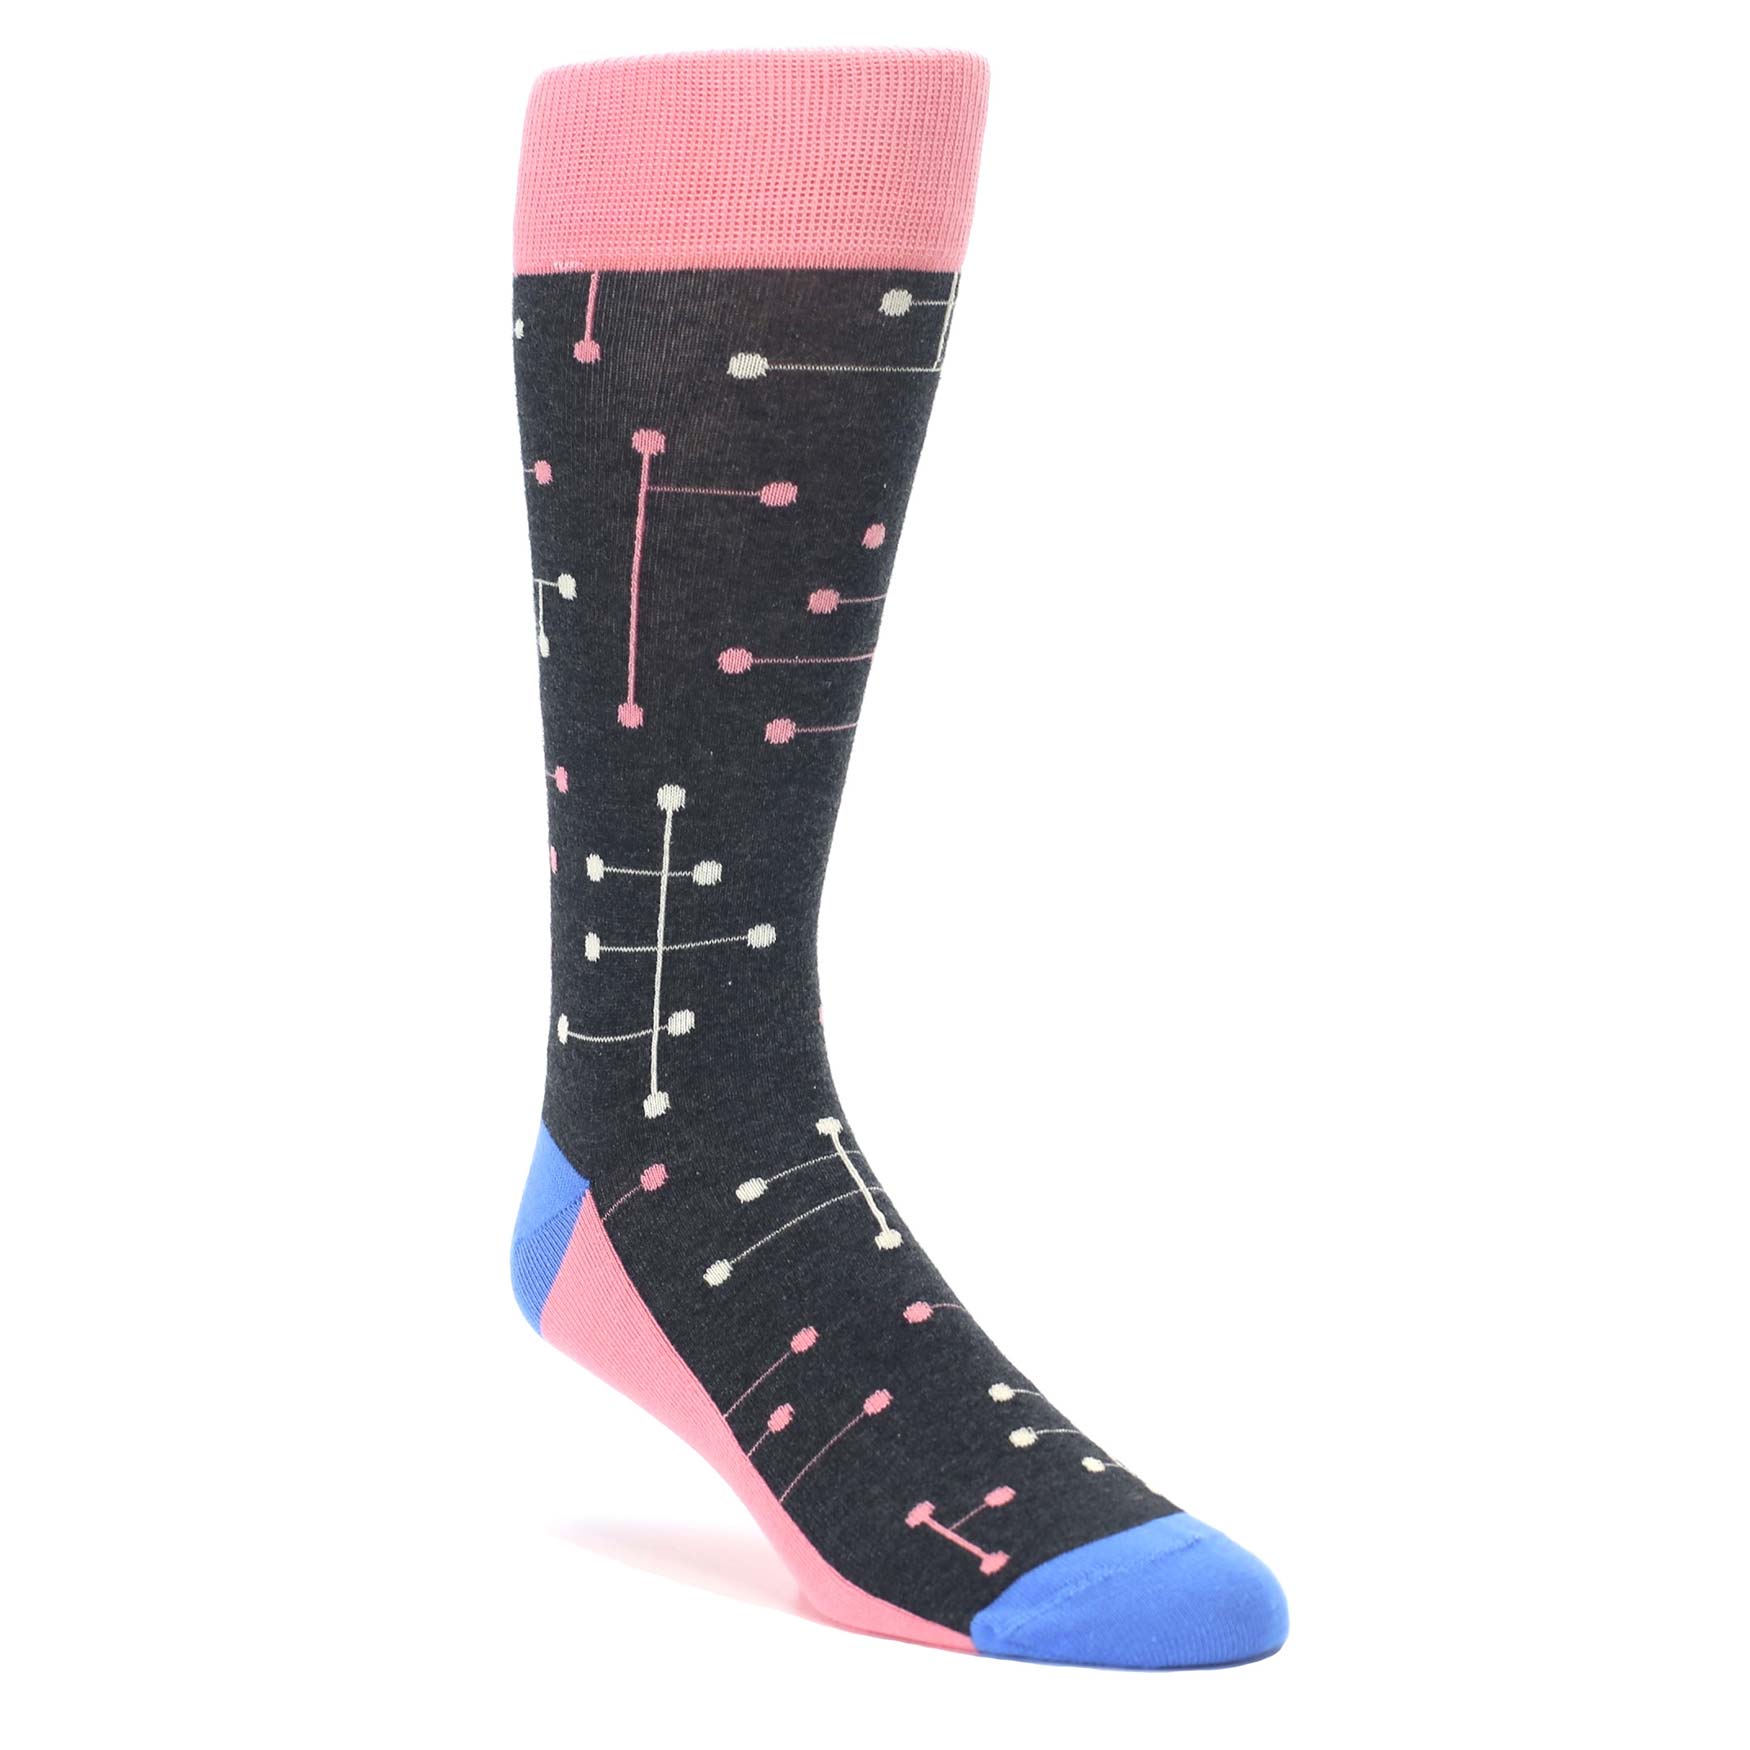 Statement Sockwear Line Dot Pink and Charcoal Gray Socks for Men